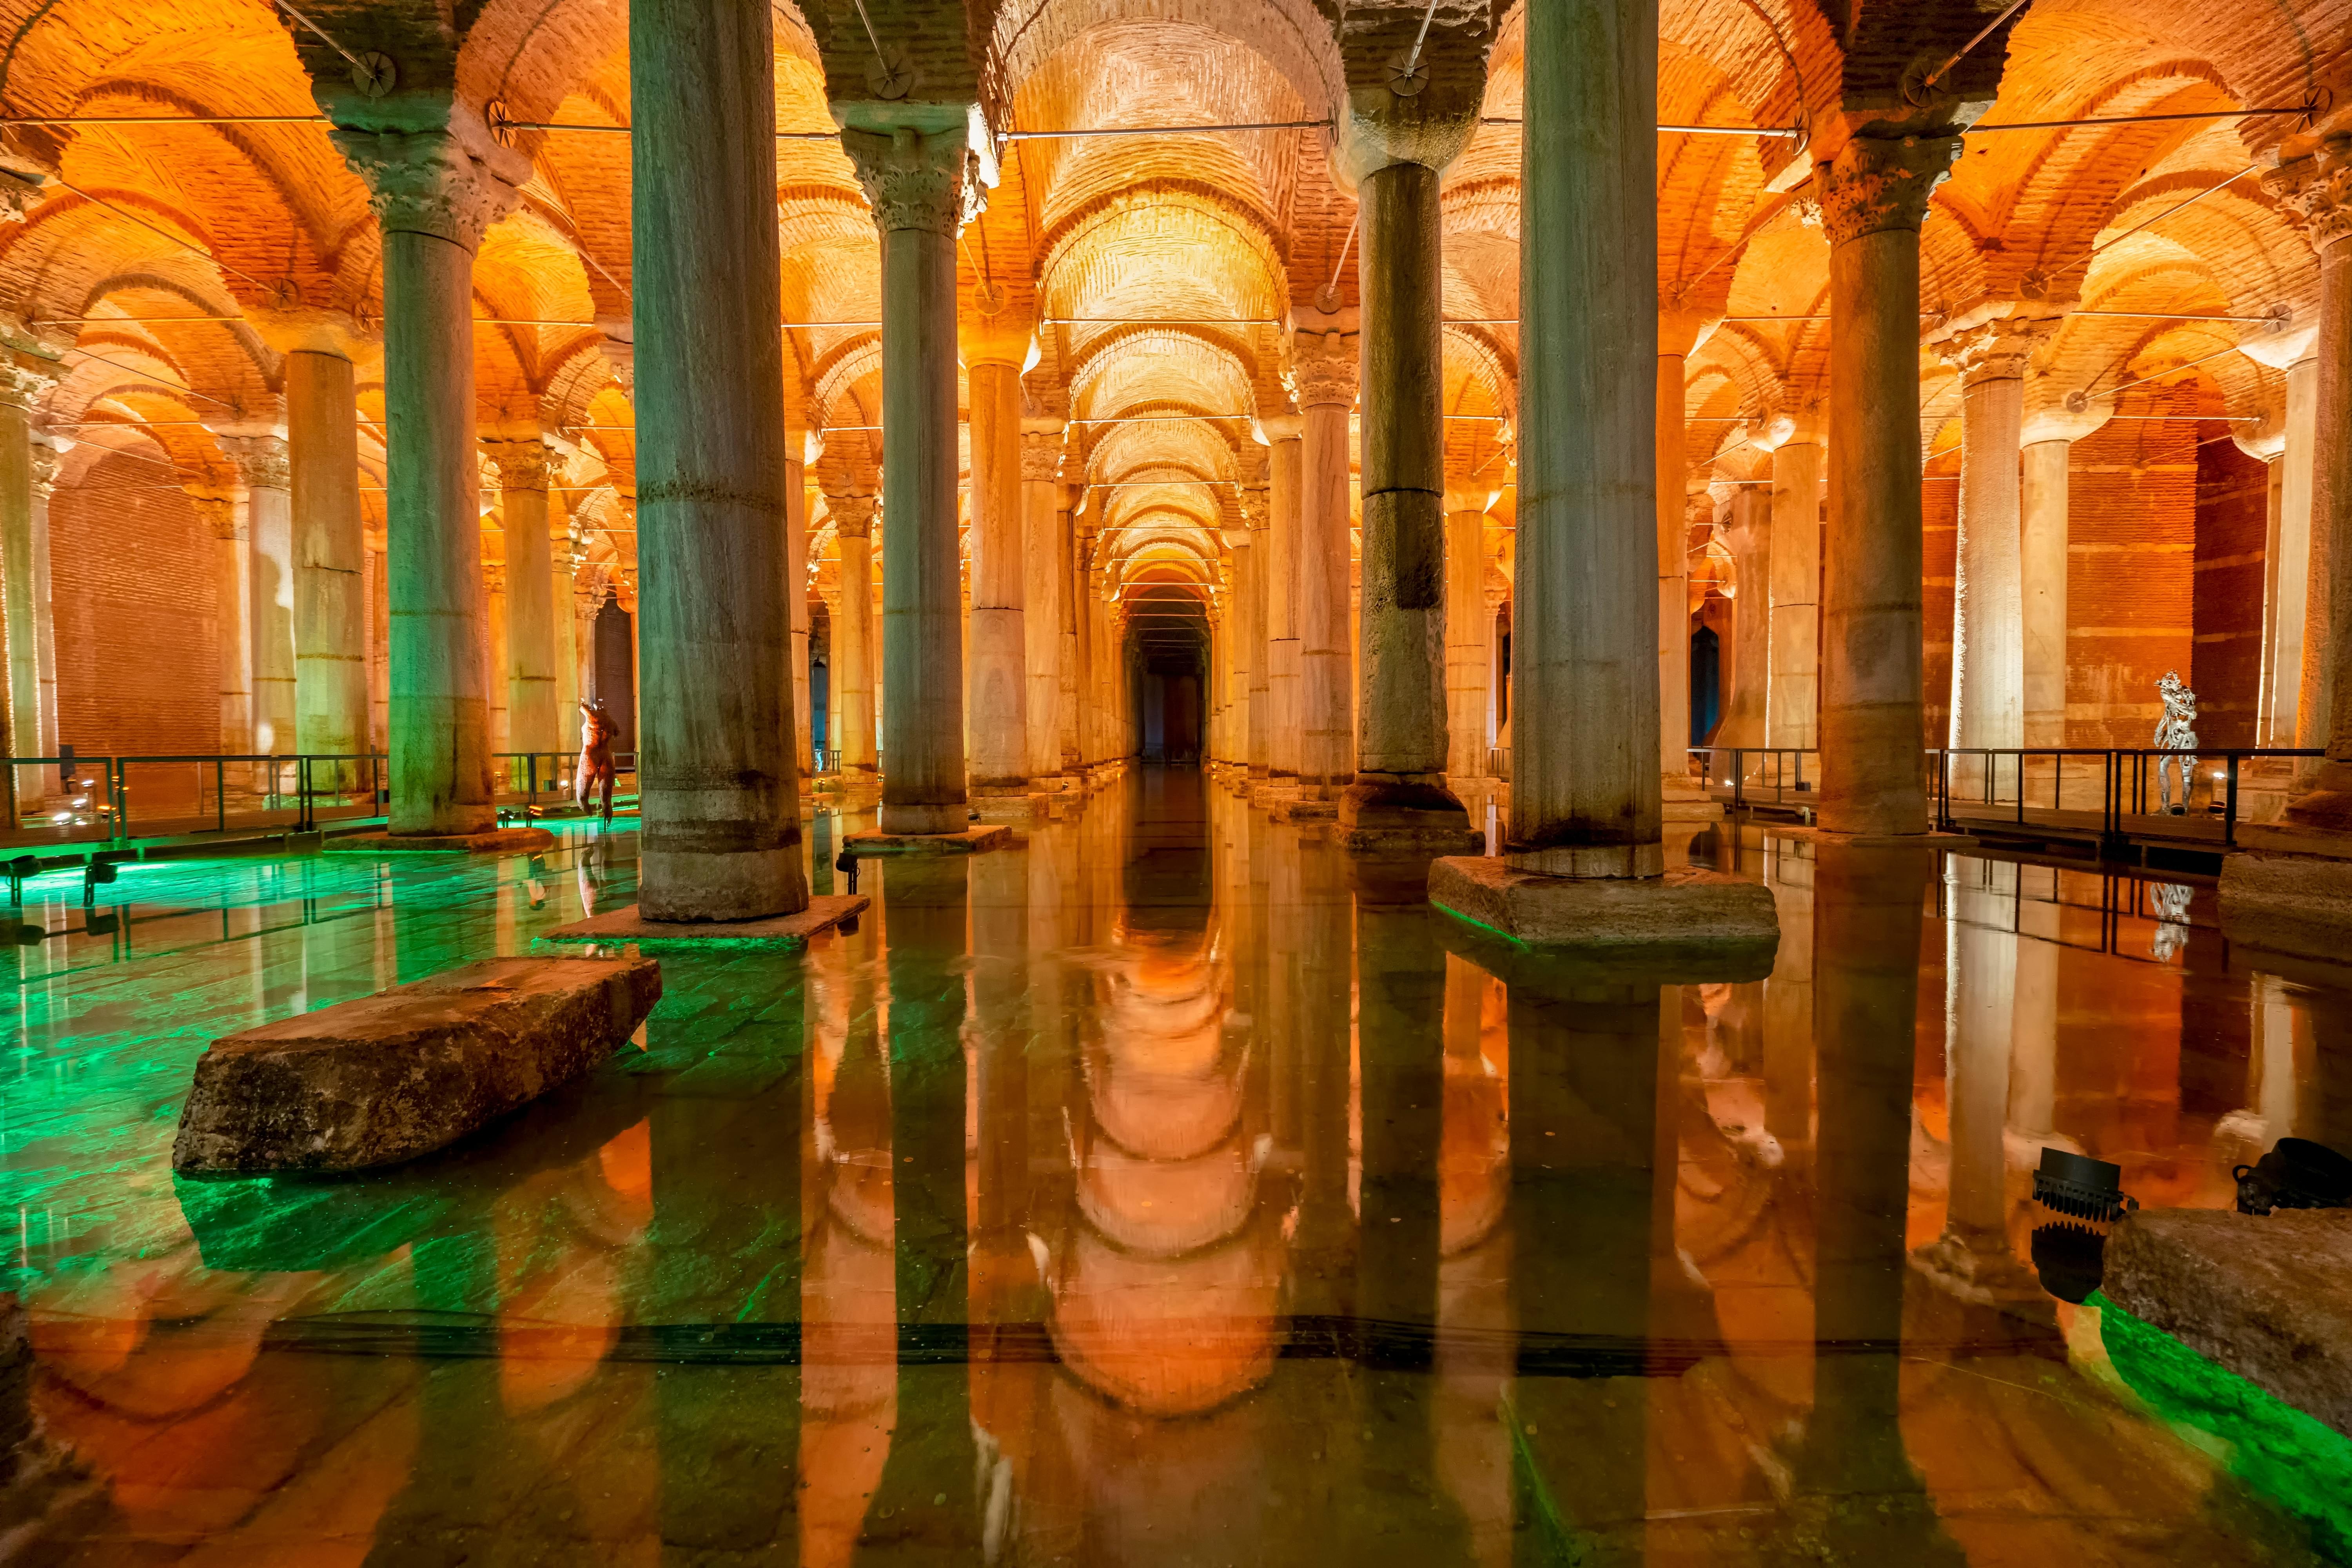 About Basilica Cistern